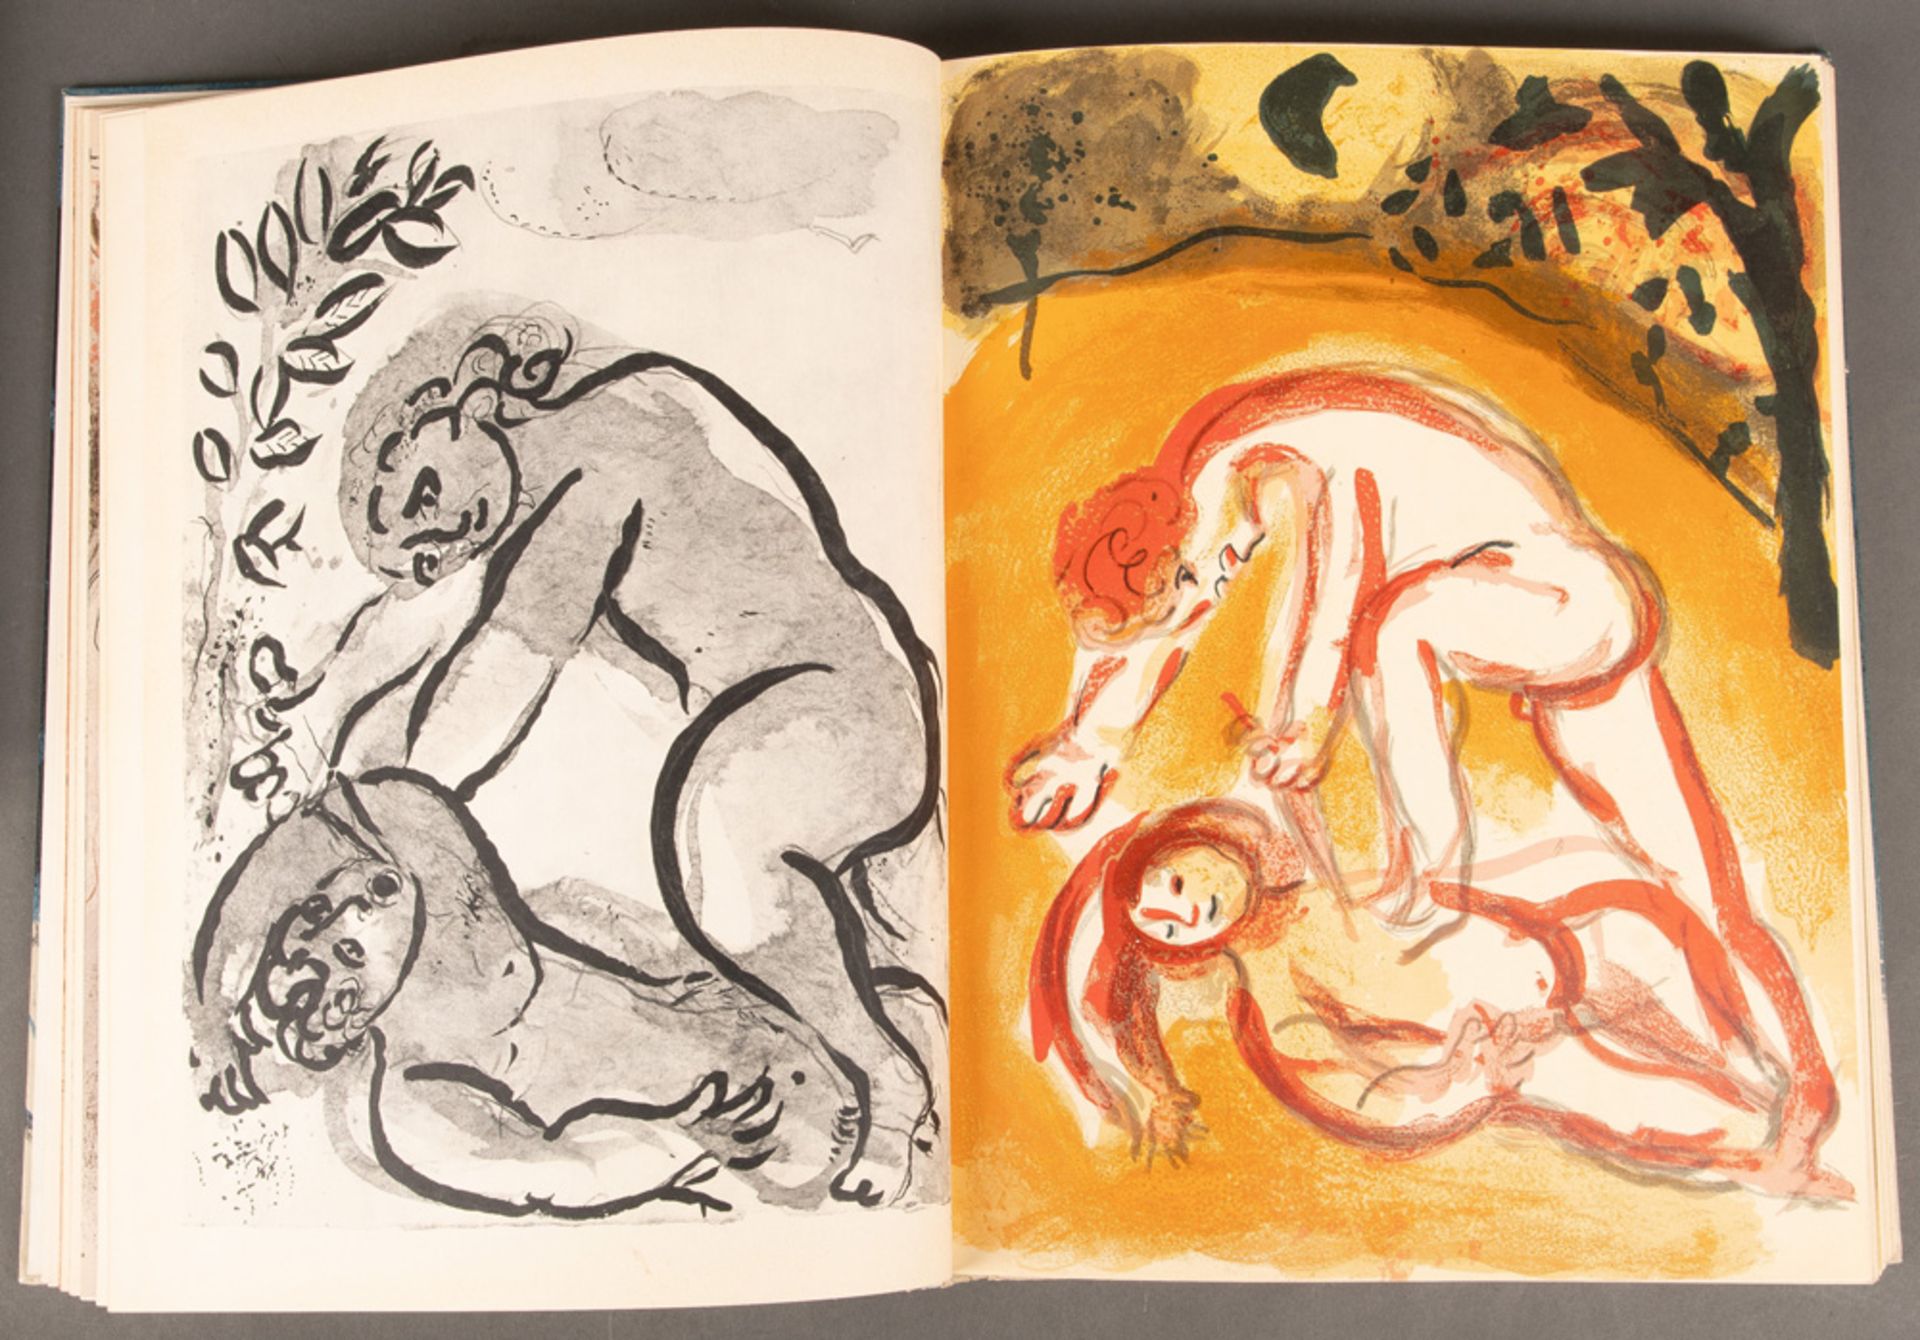 Marc Chagall (1887-1985). „Dessins pour la Bible“. Gebundene Doppelausgabe mit Bibel-Illustrationen,